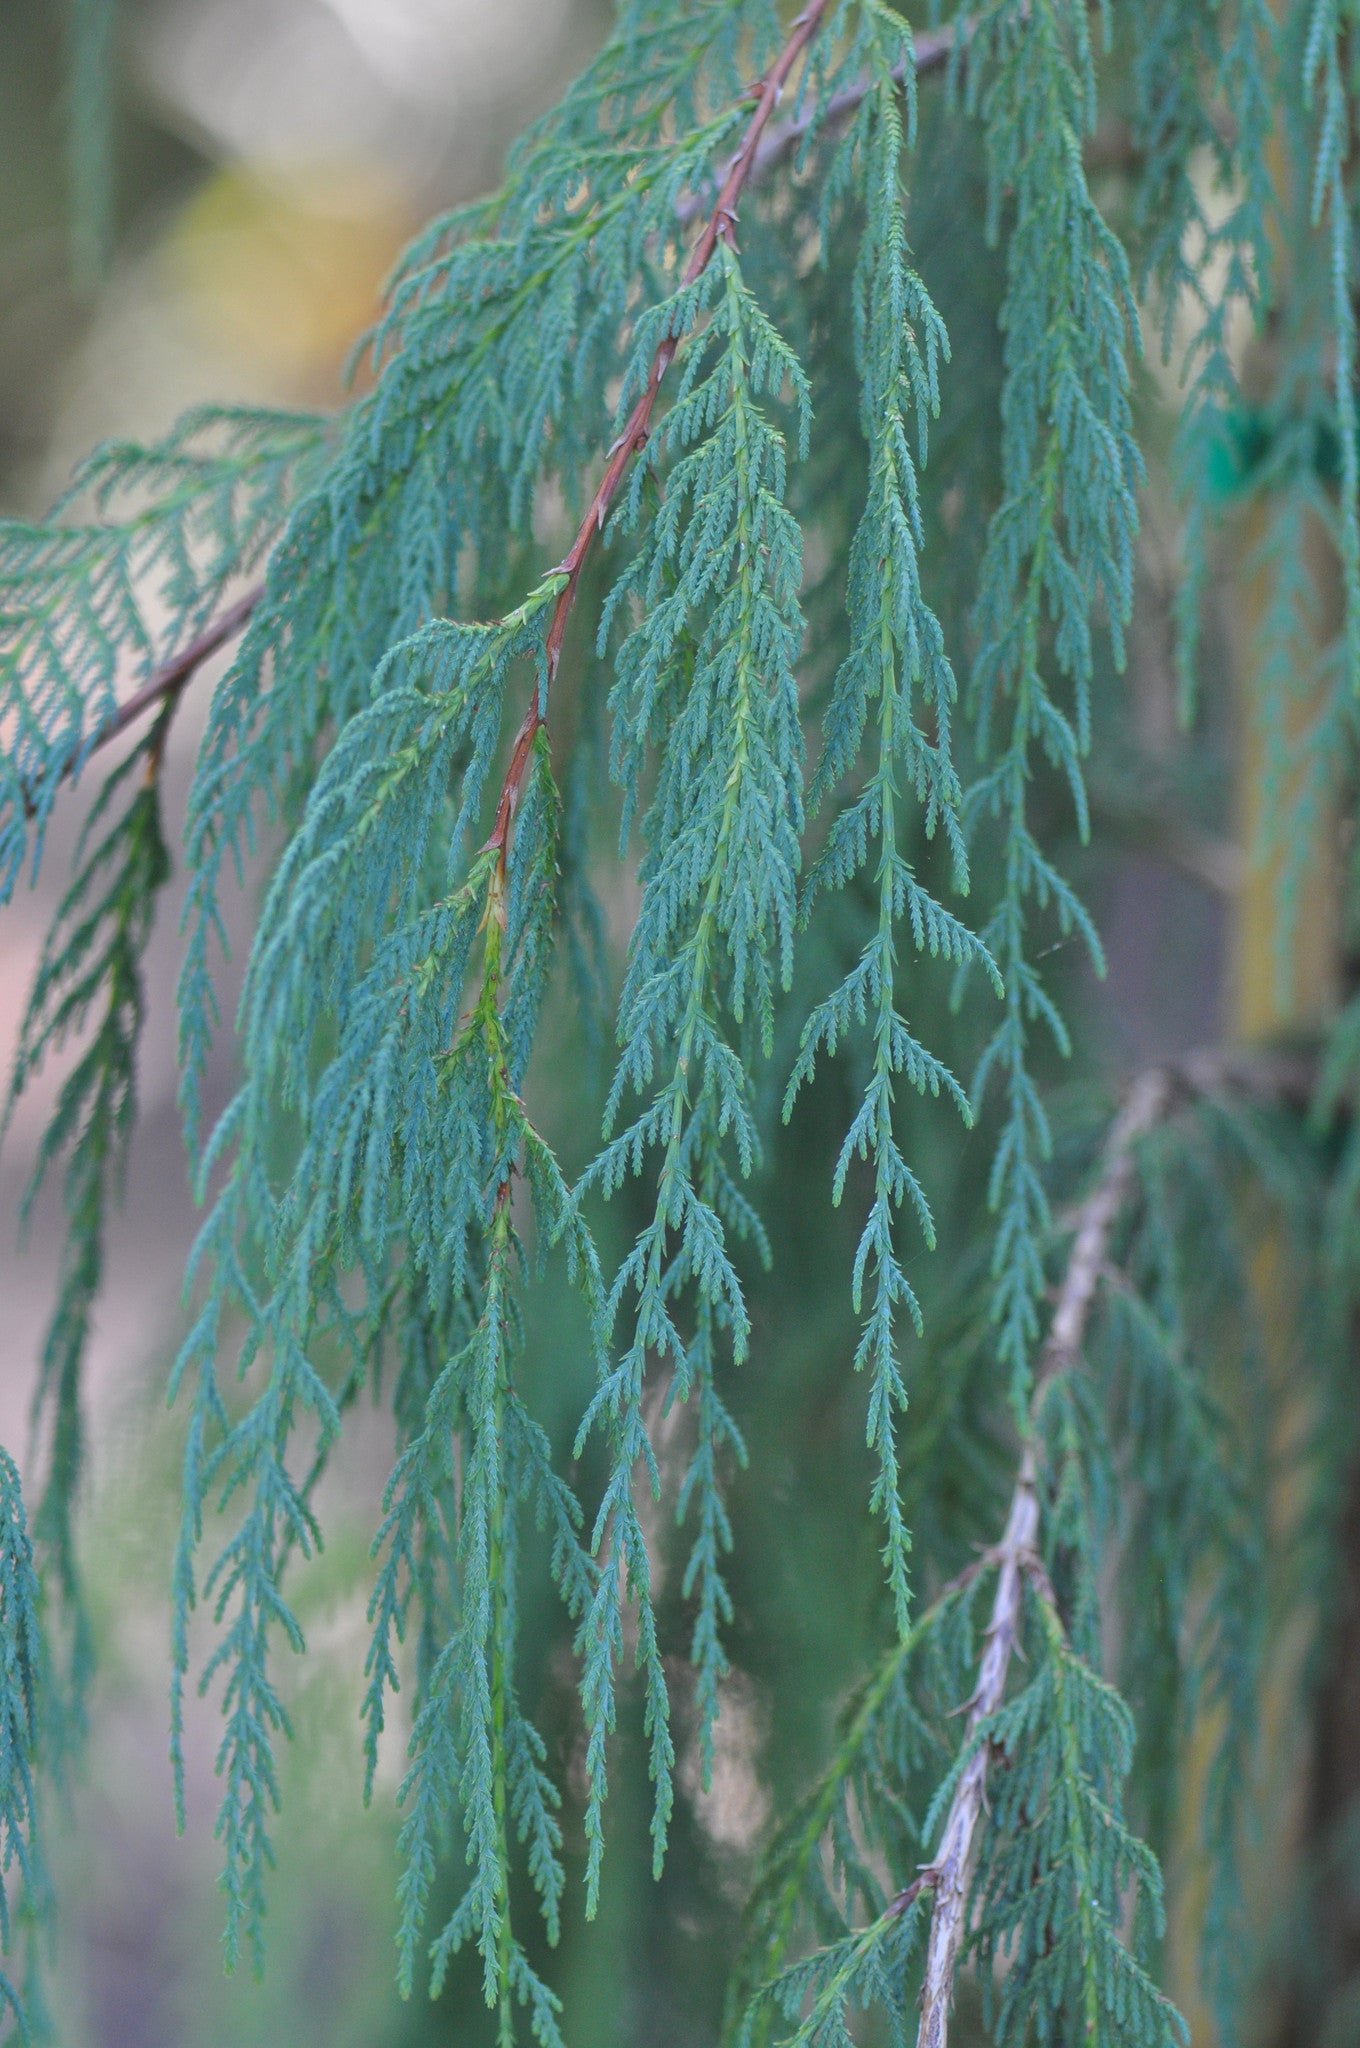 Cupressus cashmeriana (Bhutan Cypress, Kashmir Cypress, Weeping Cypress) syn. C. darjeelingensis